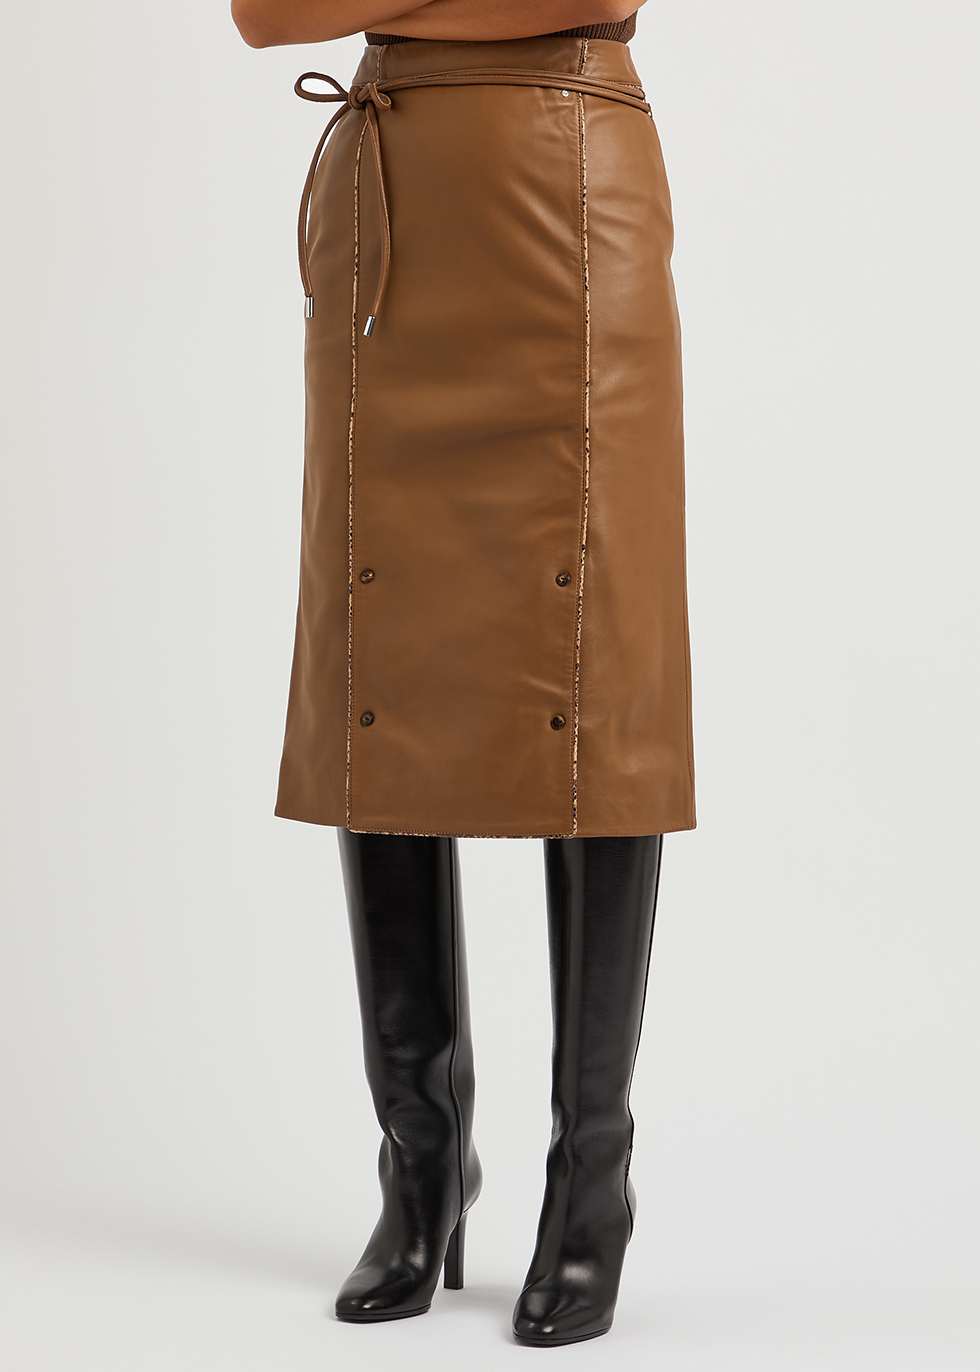 Harvey Nichols Women Clothing Skirts Leather Skirts Malli brown leather midi skirt 